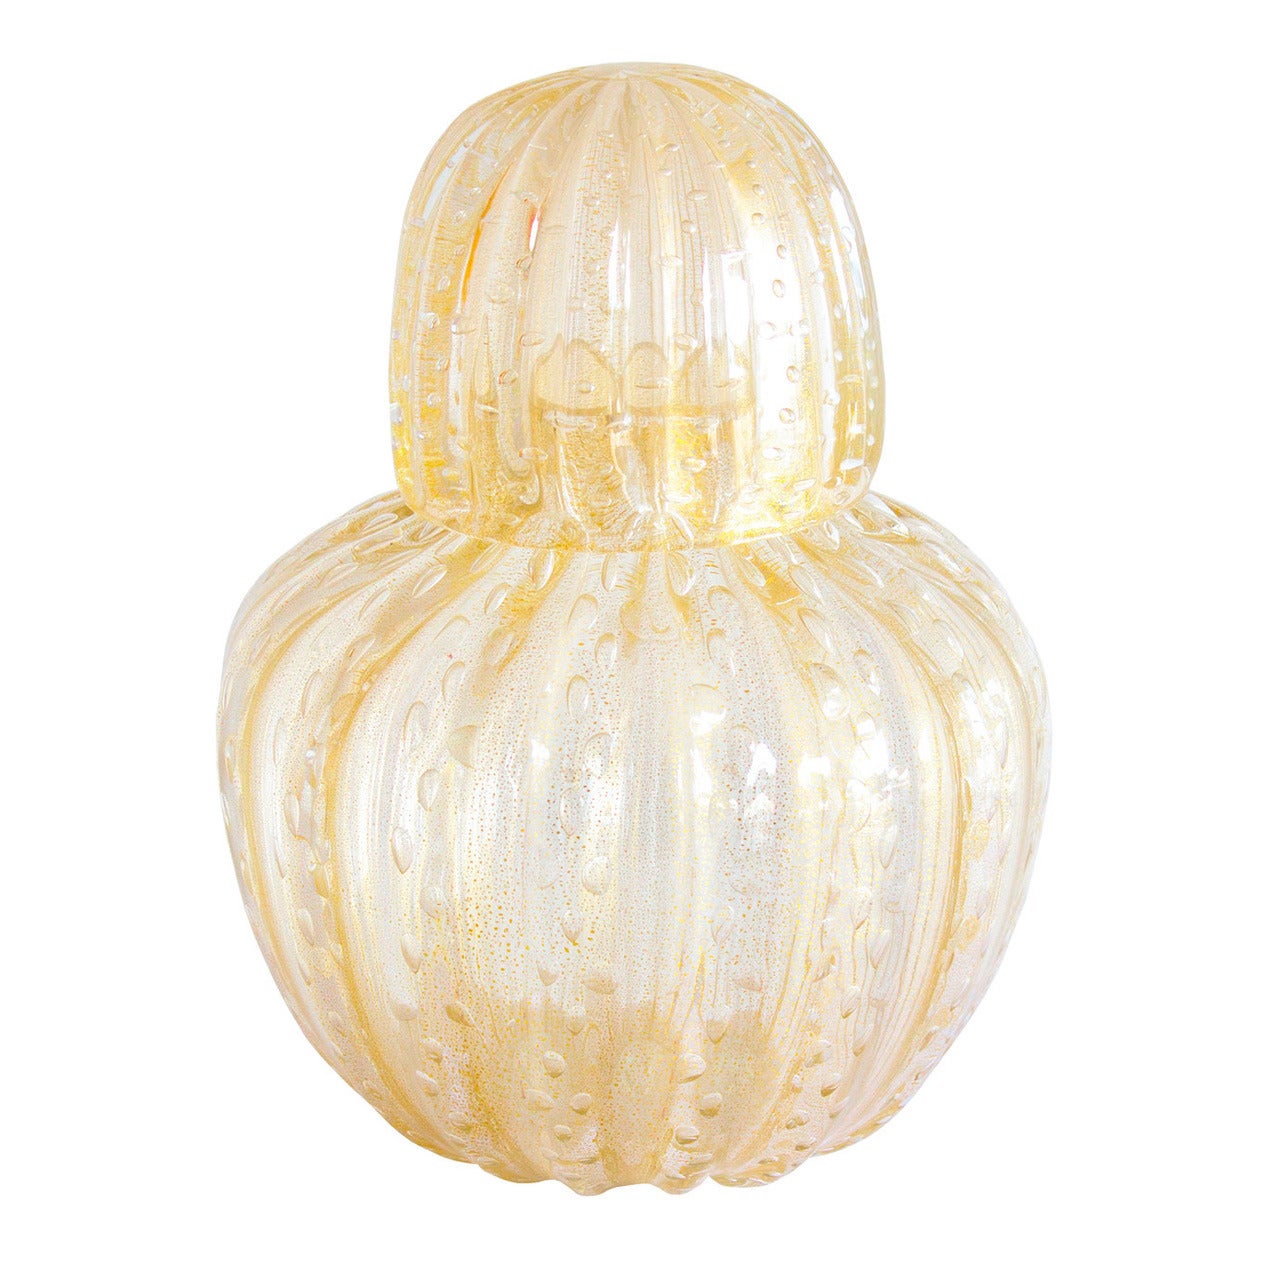 Urn Vase Designed by Ercole Barovier.